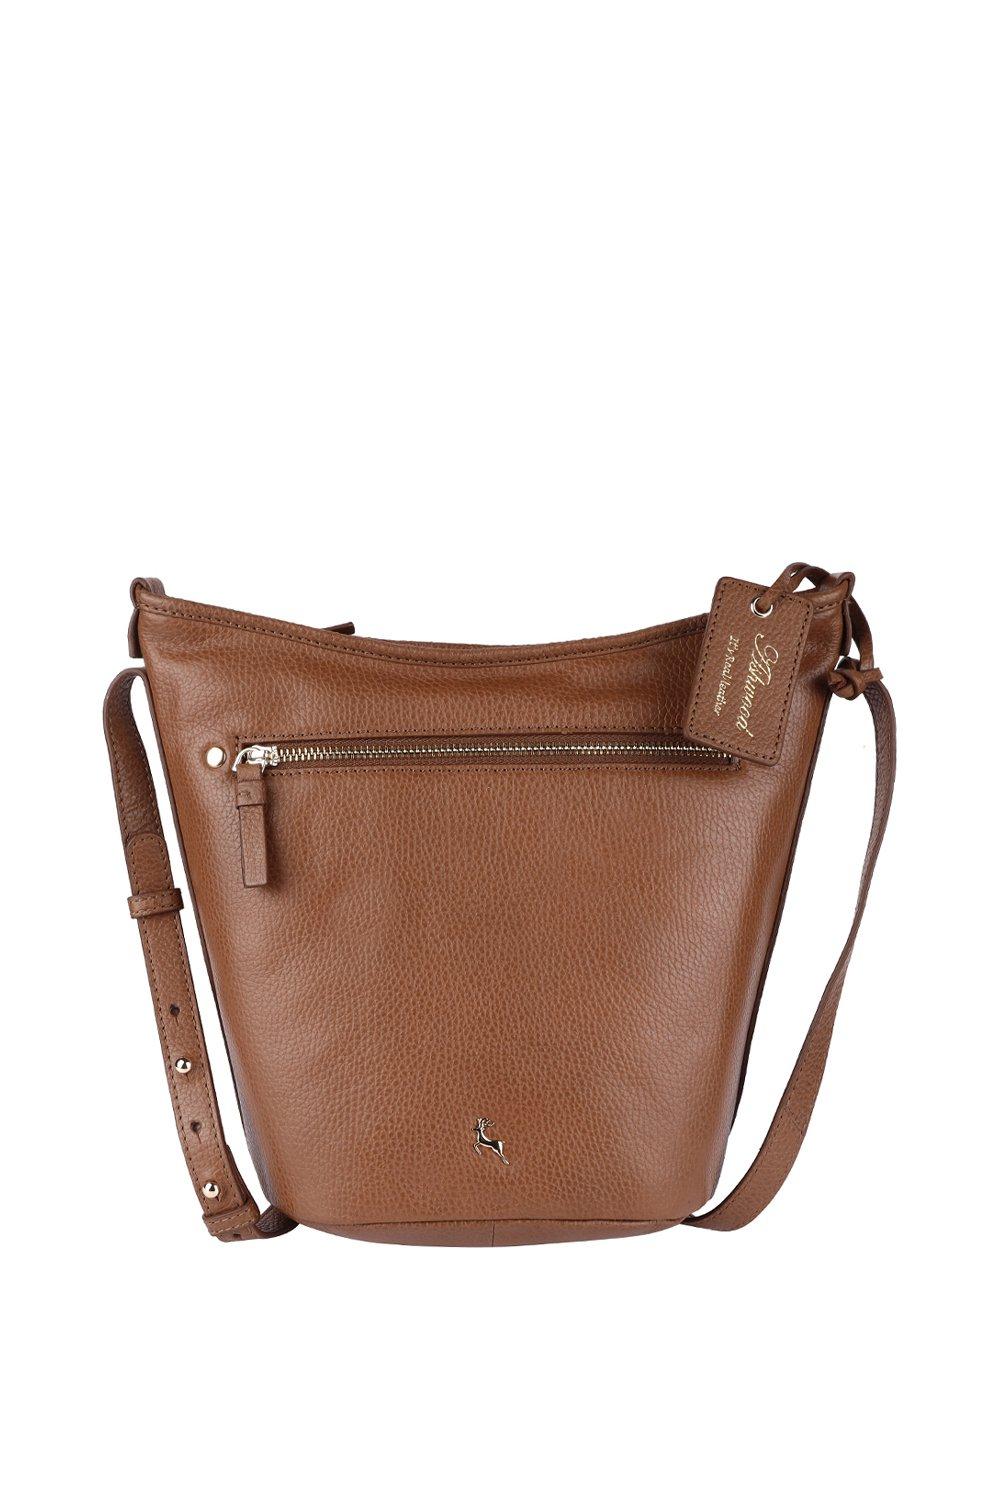 Ashwood Leather, Bags, Genuine Leather Crossbody Bag